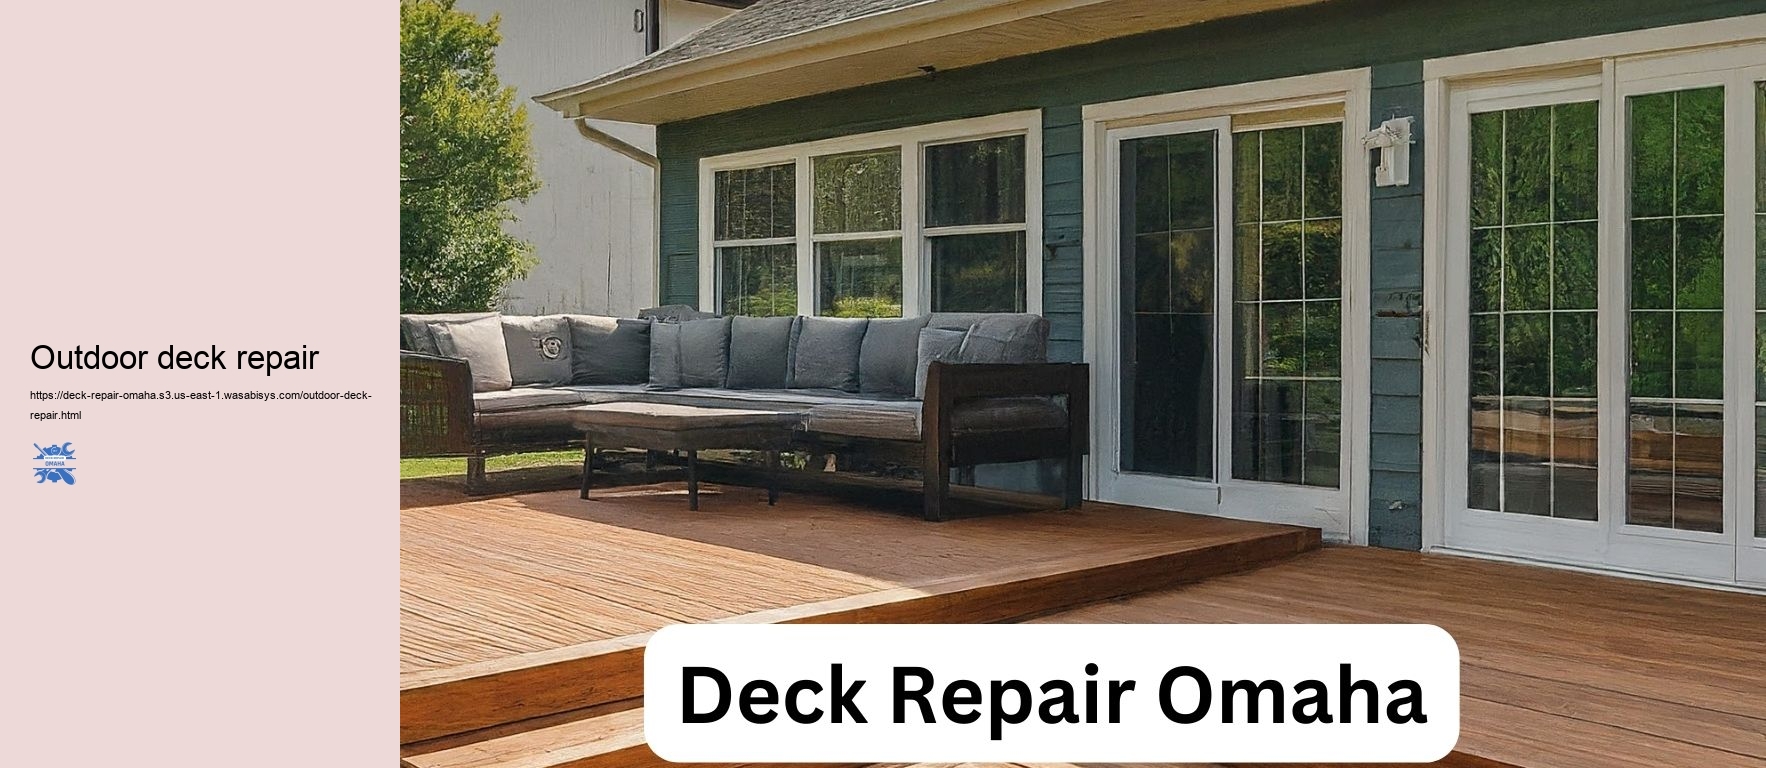 Outdoor deck repair